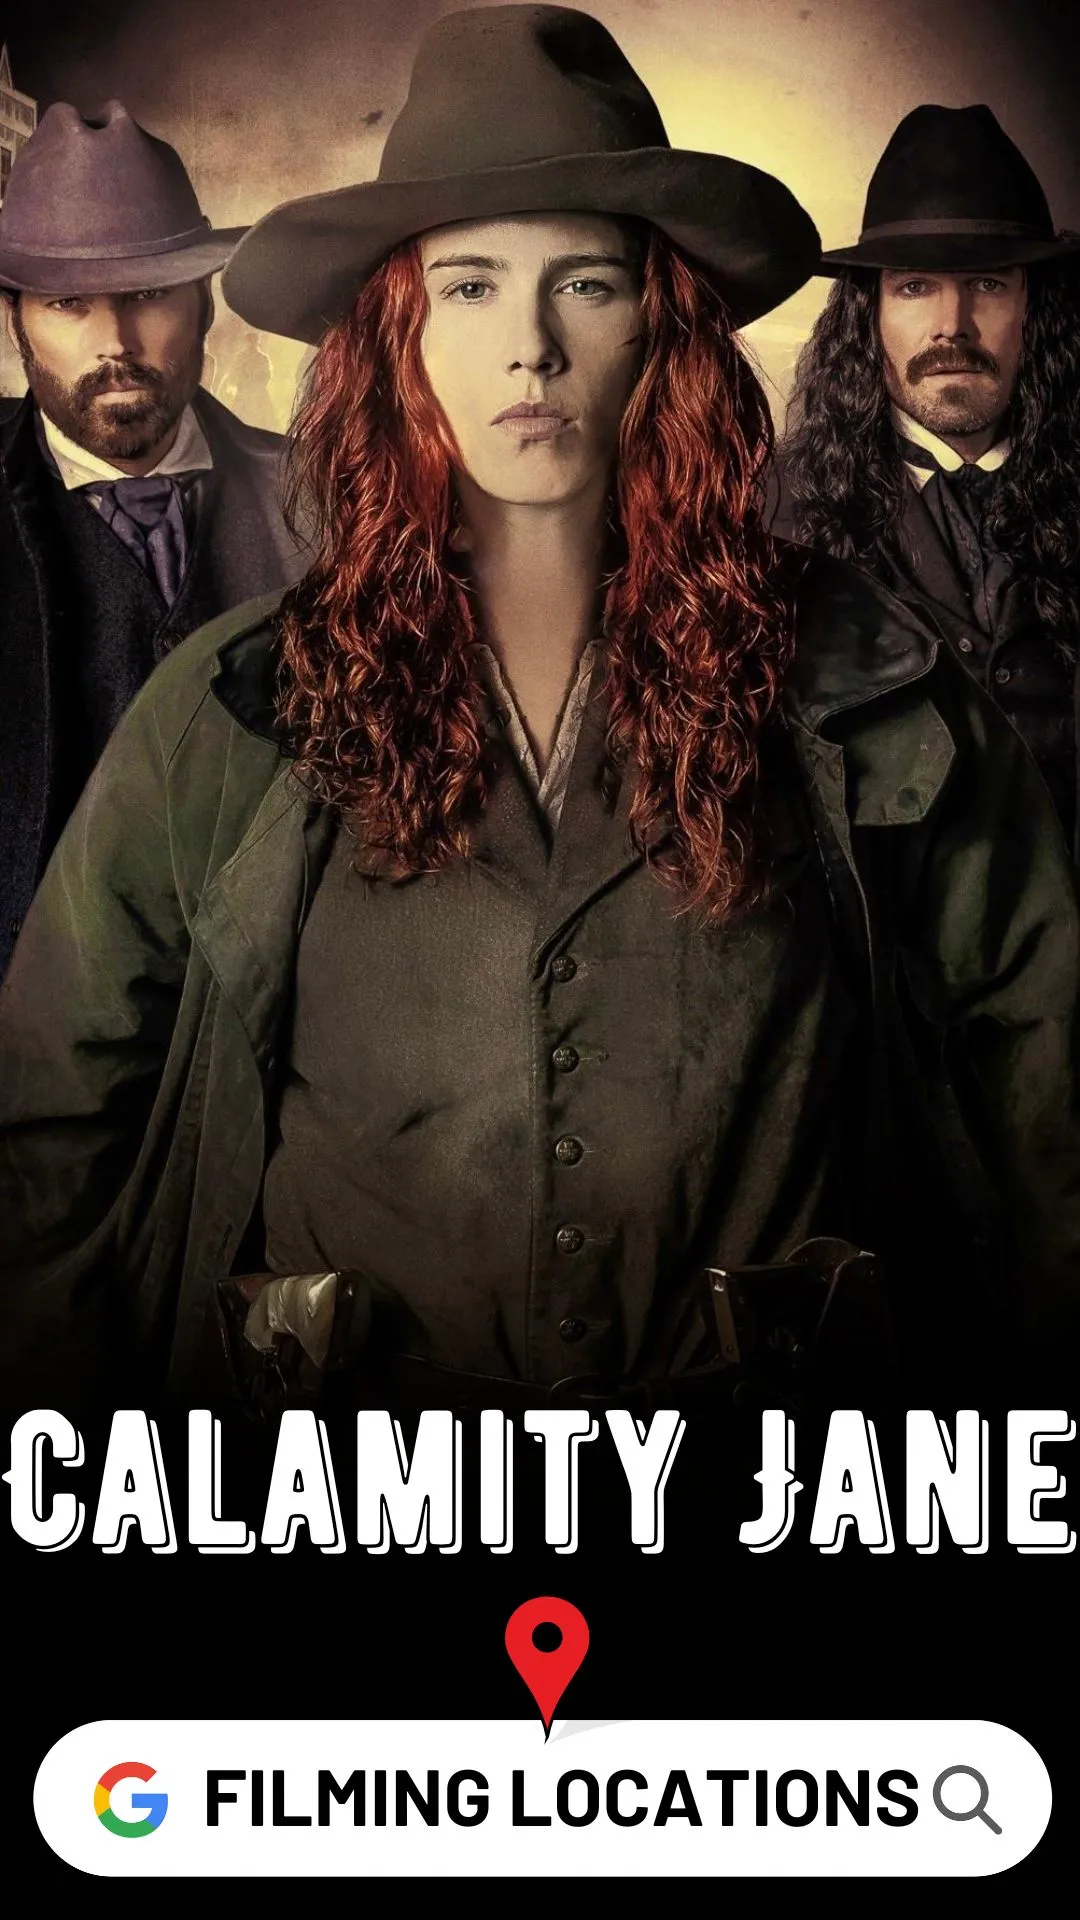 Calamity Jane Filming Locations